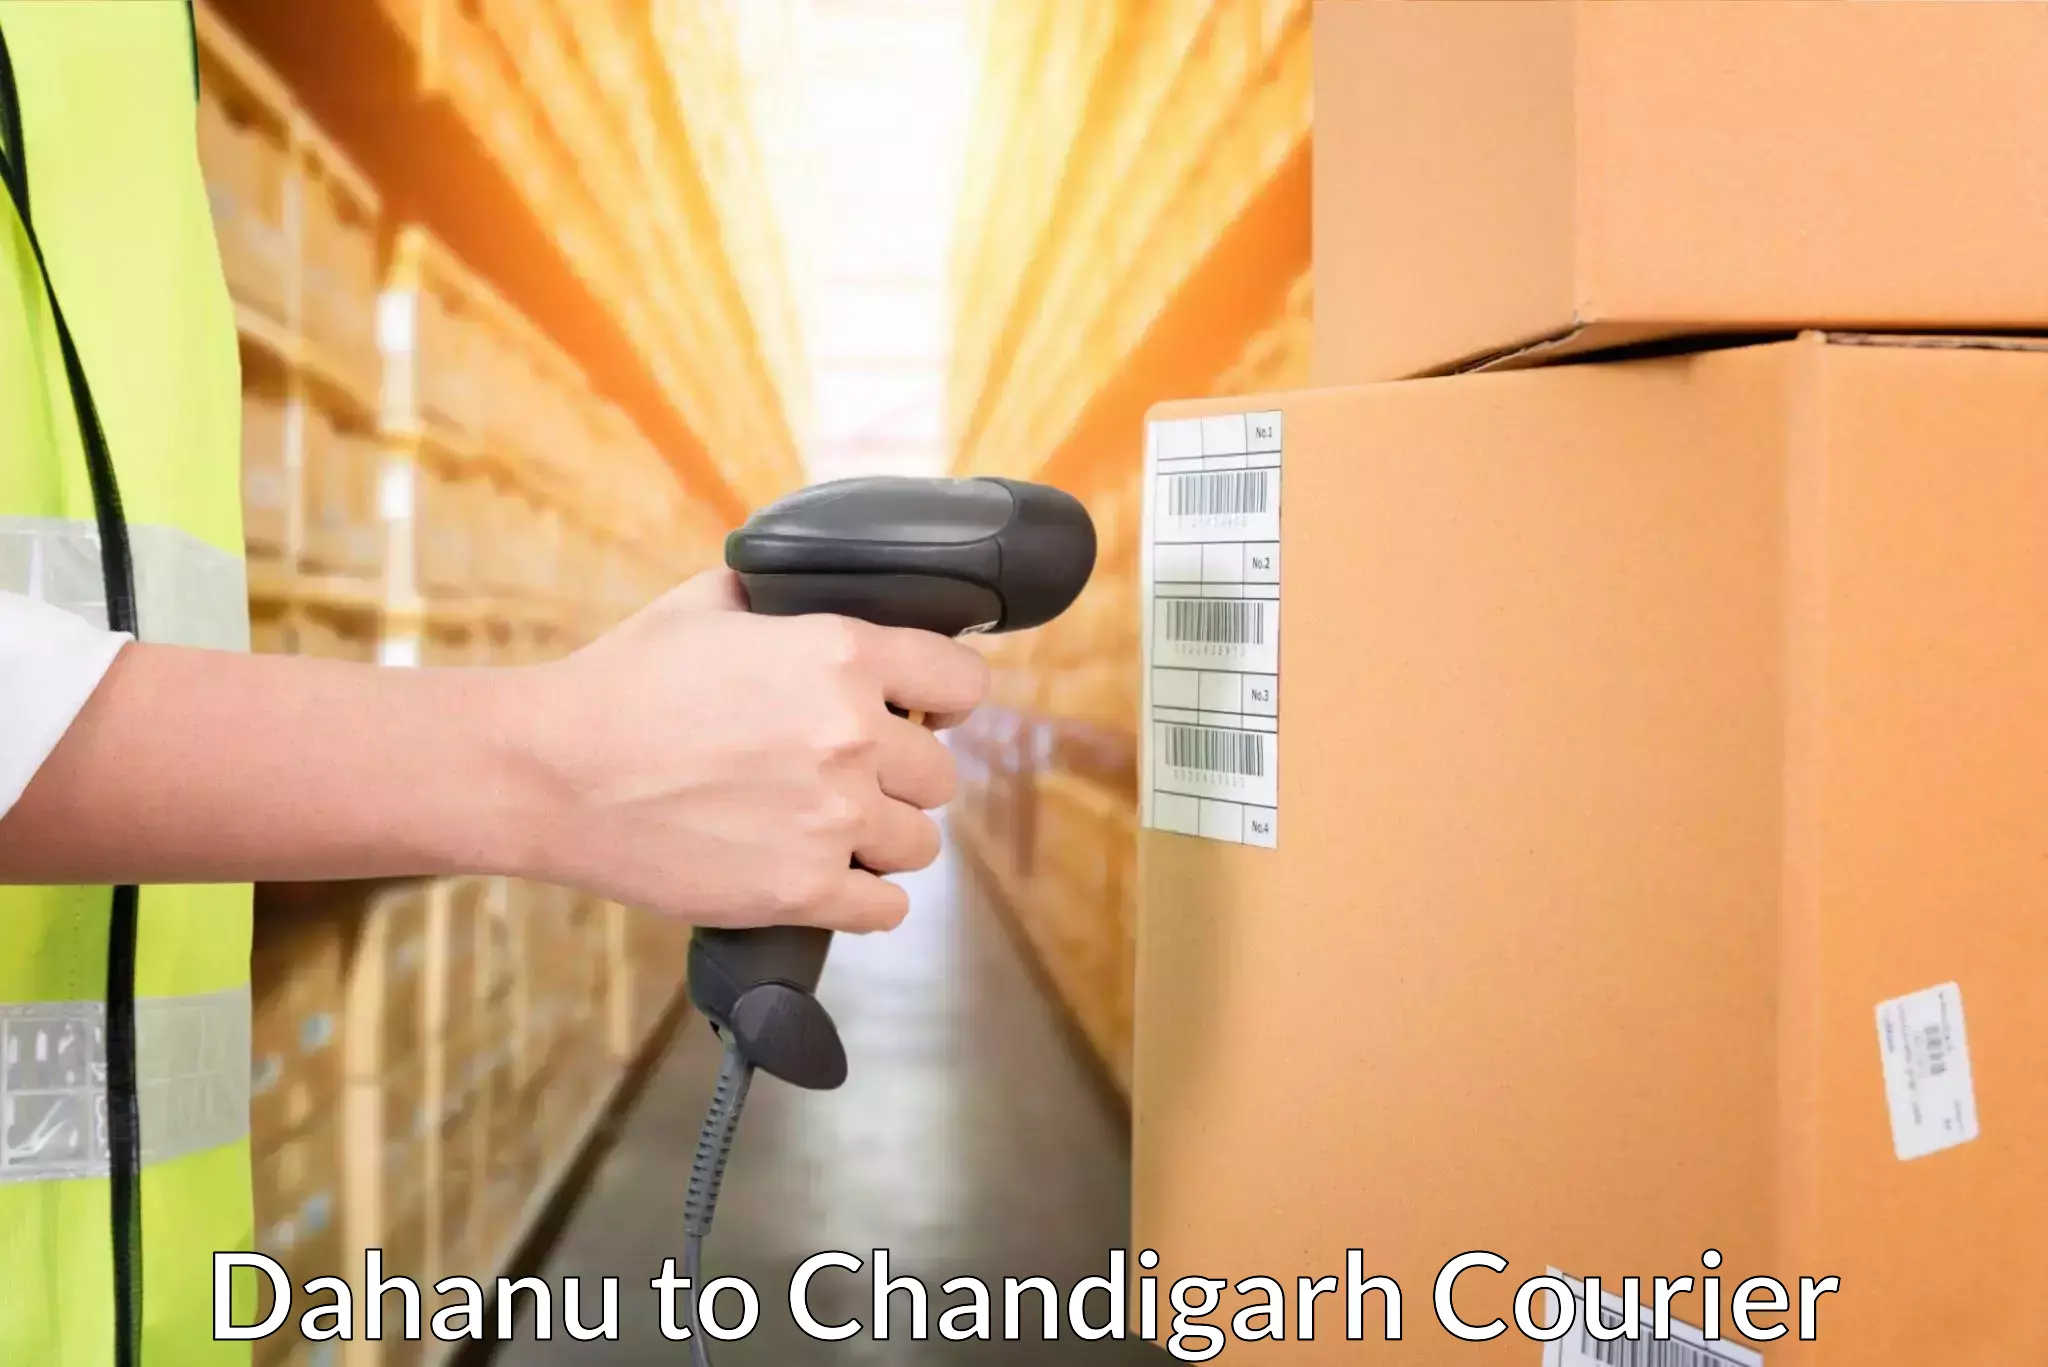 Logistics service provider Dahanu to Chandigarh